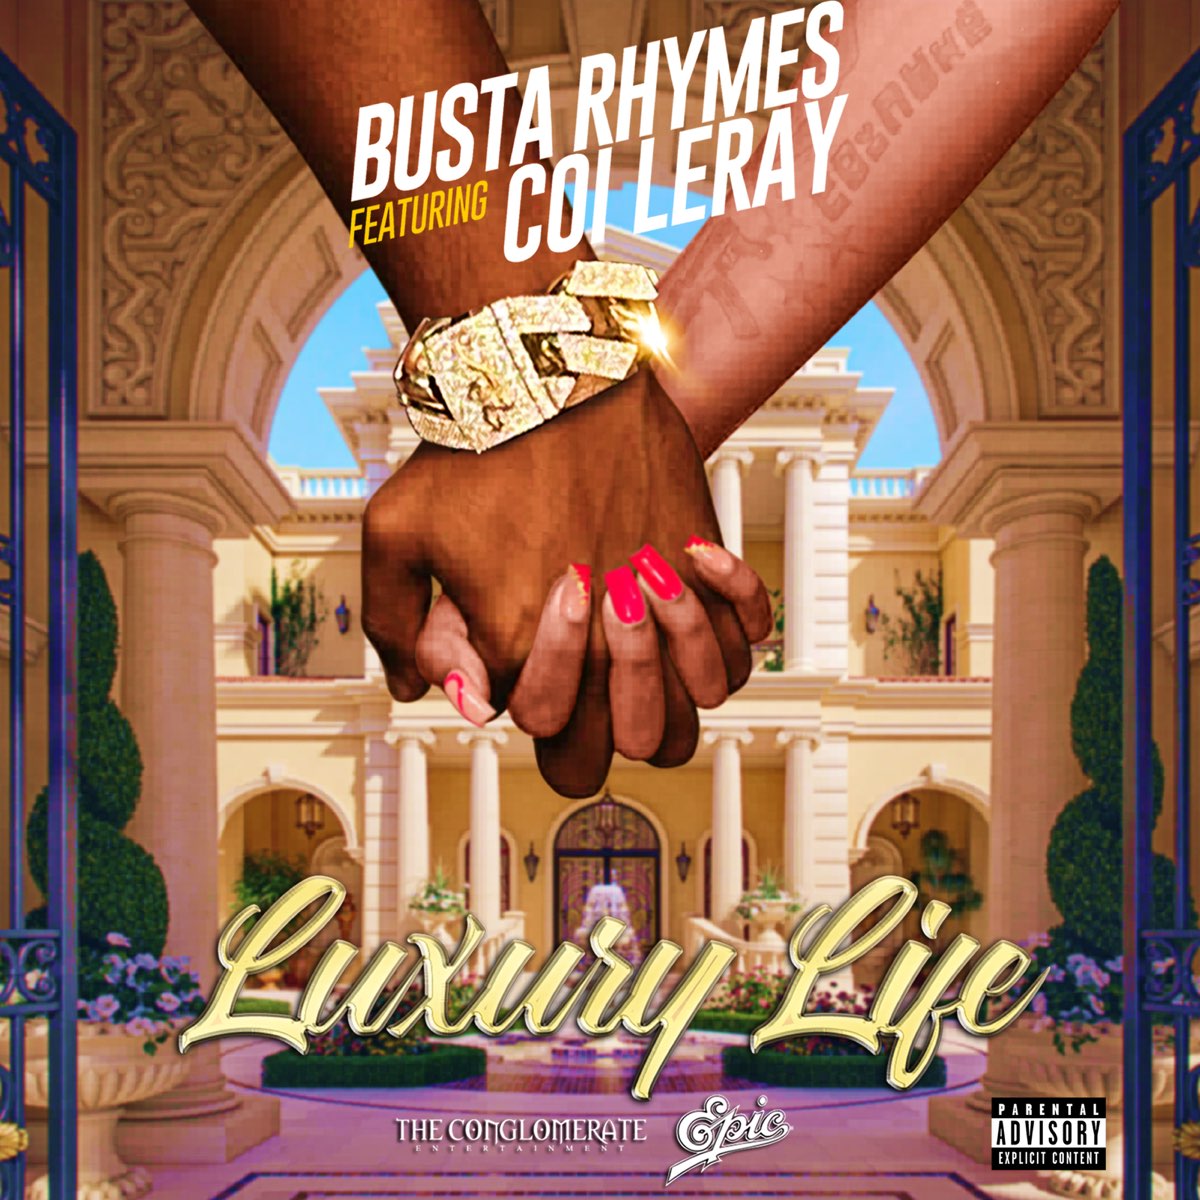 Busta Rhymes & Coi Leray Reunite For “Luxury Life” Single #CoiLeray